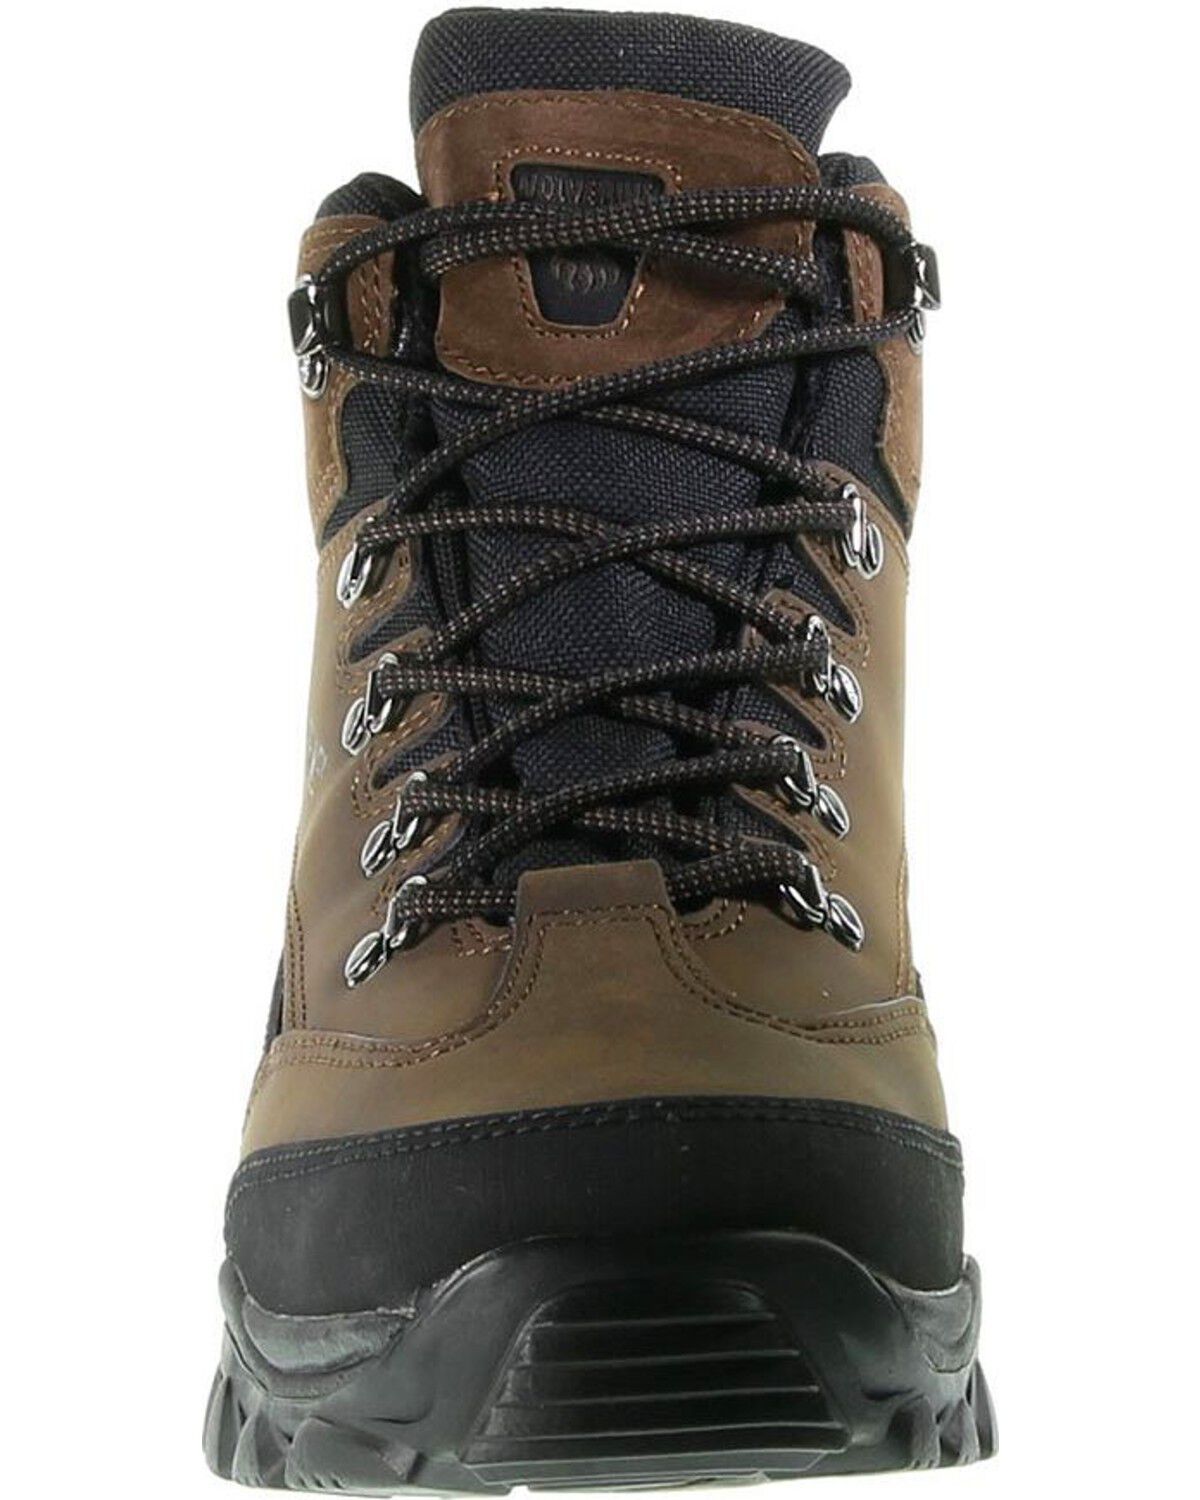 wolverine spencer black hiking boots